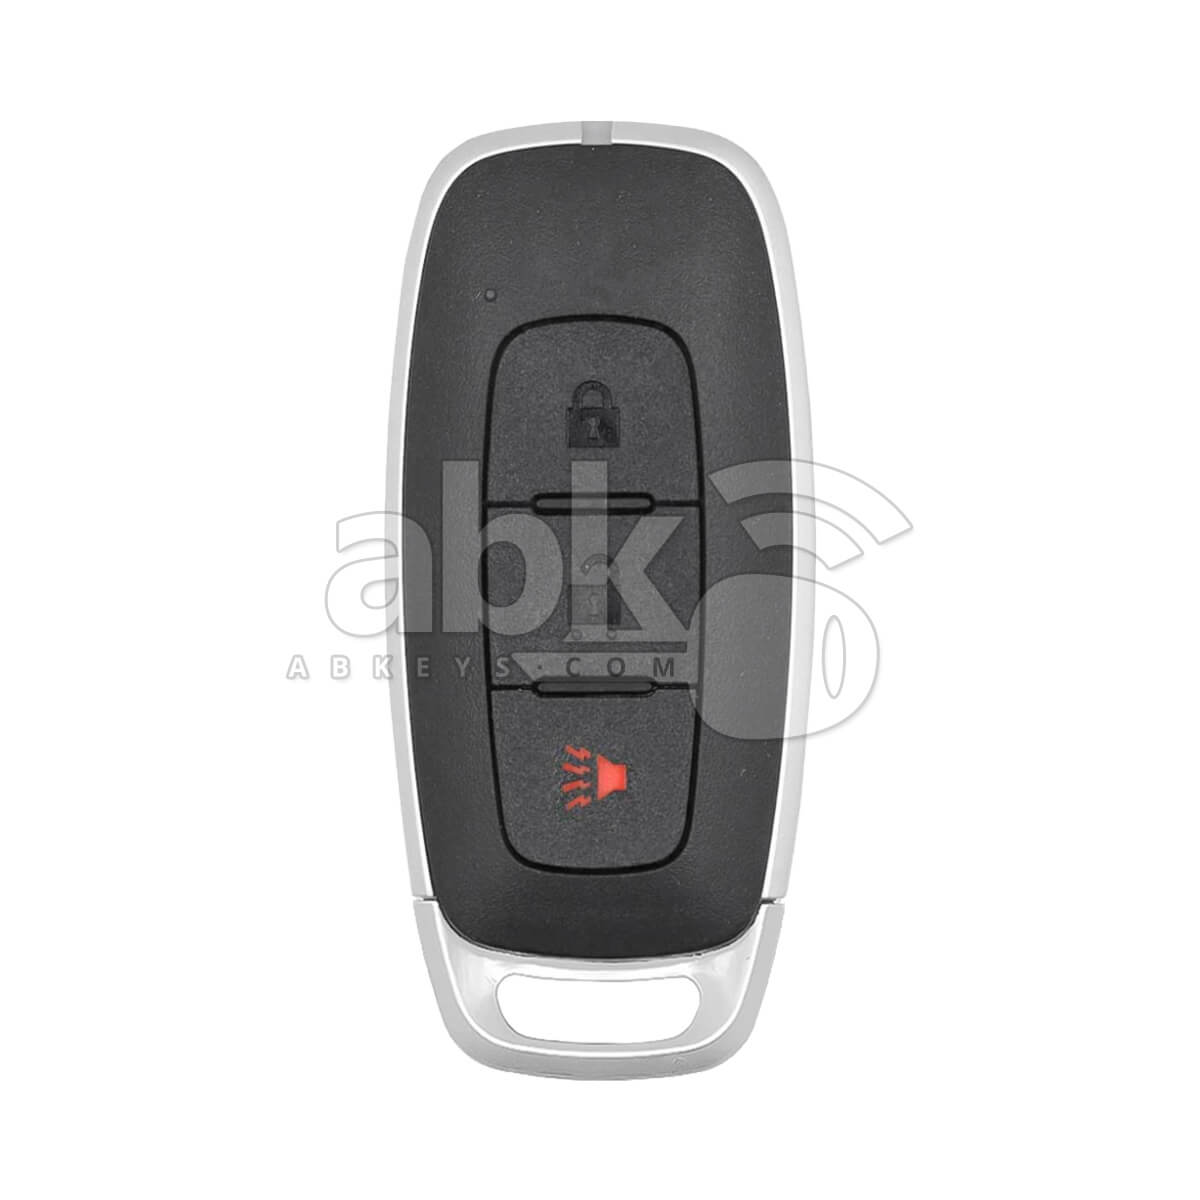 Nissan Pathfinder 2023+ Smart Key 3Buttons 285E3-5MR1B 433MHz KR5TXPZ1 - ABK-3817 - ABKEYS.COM